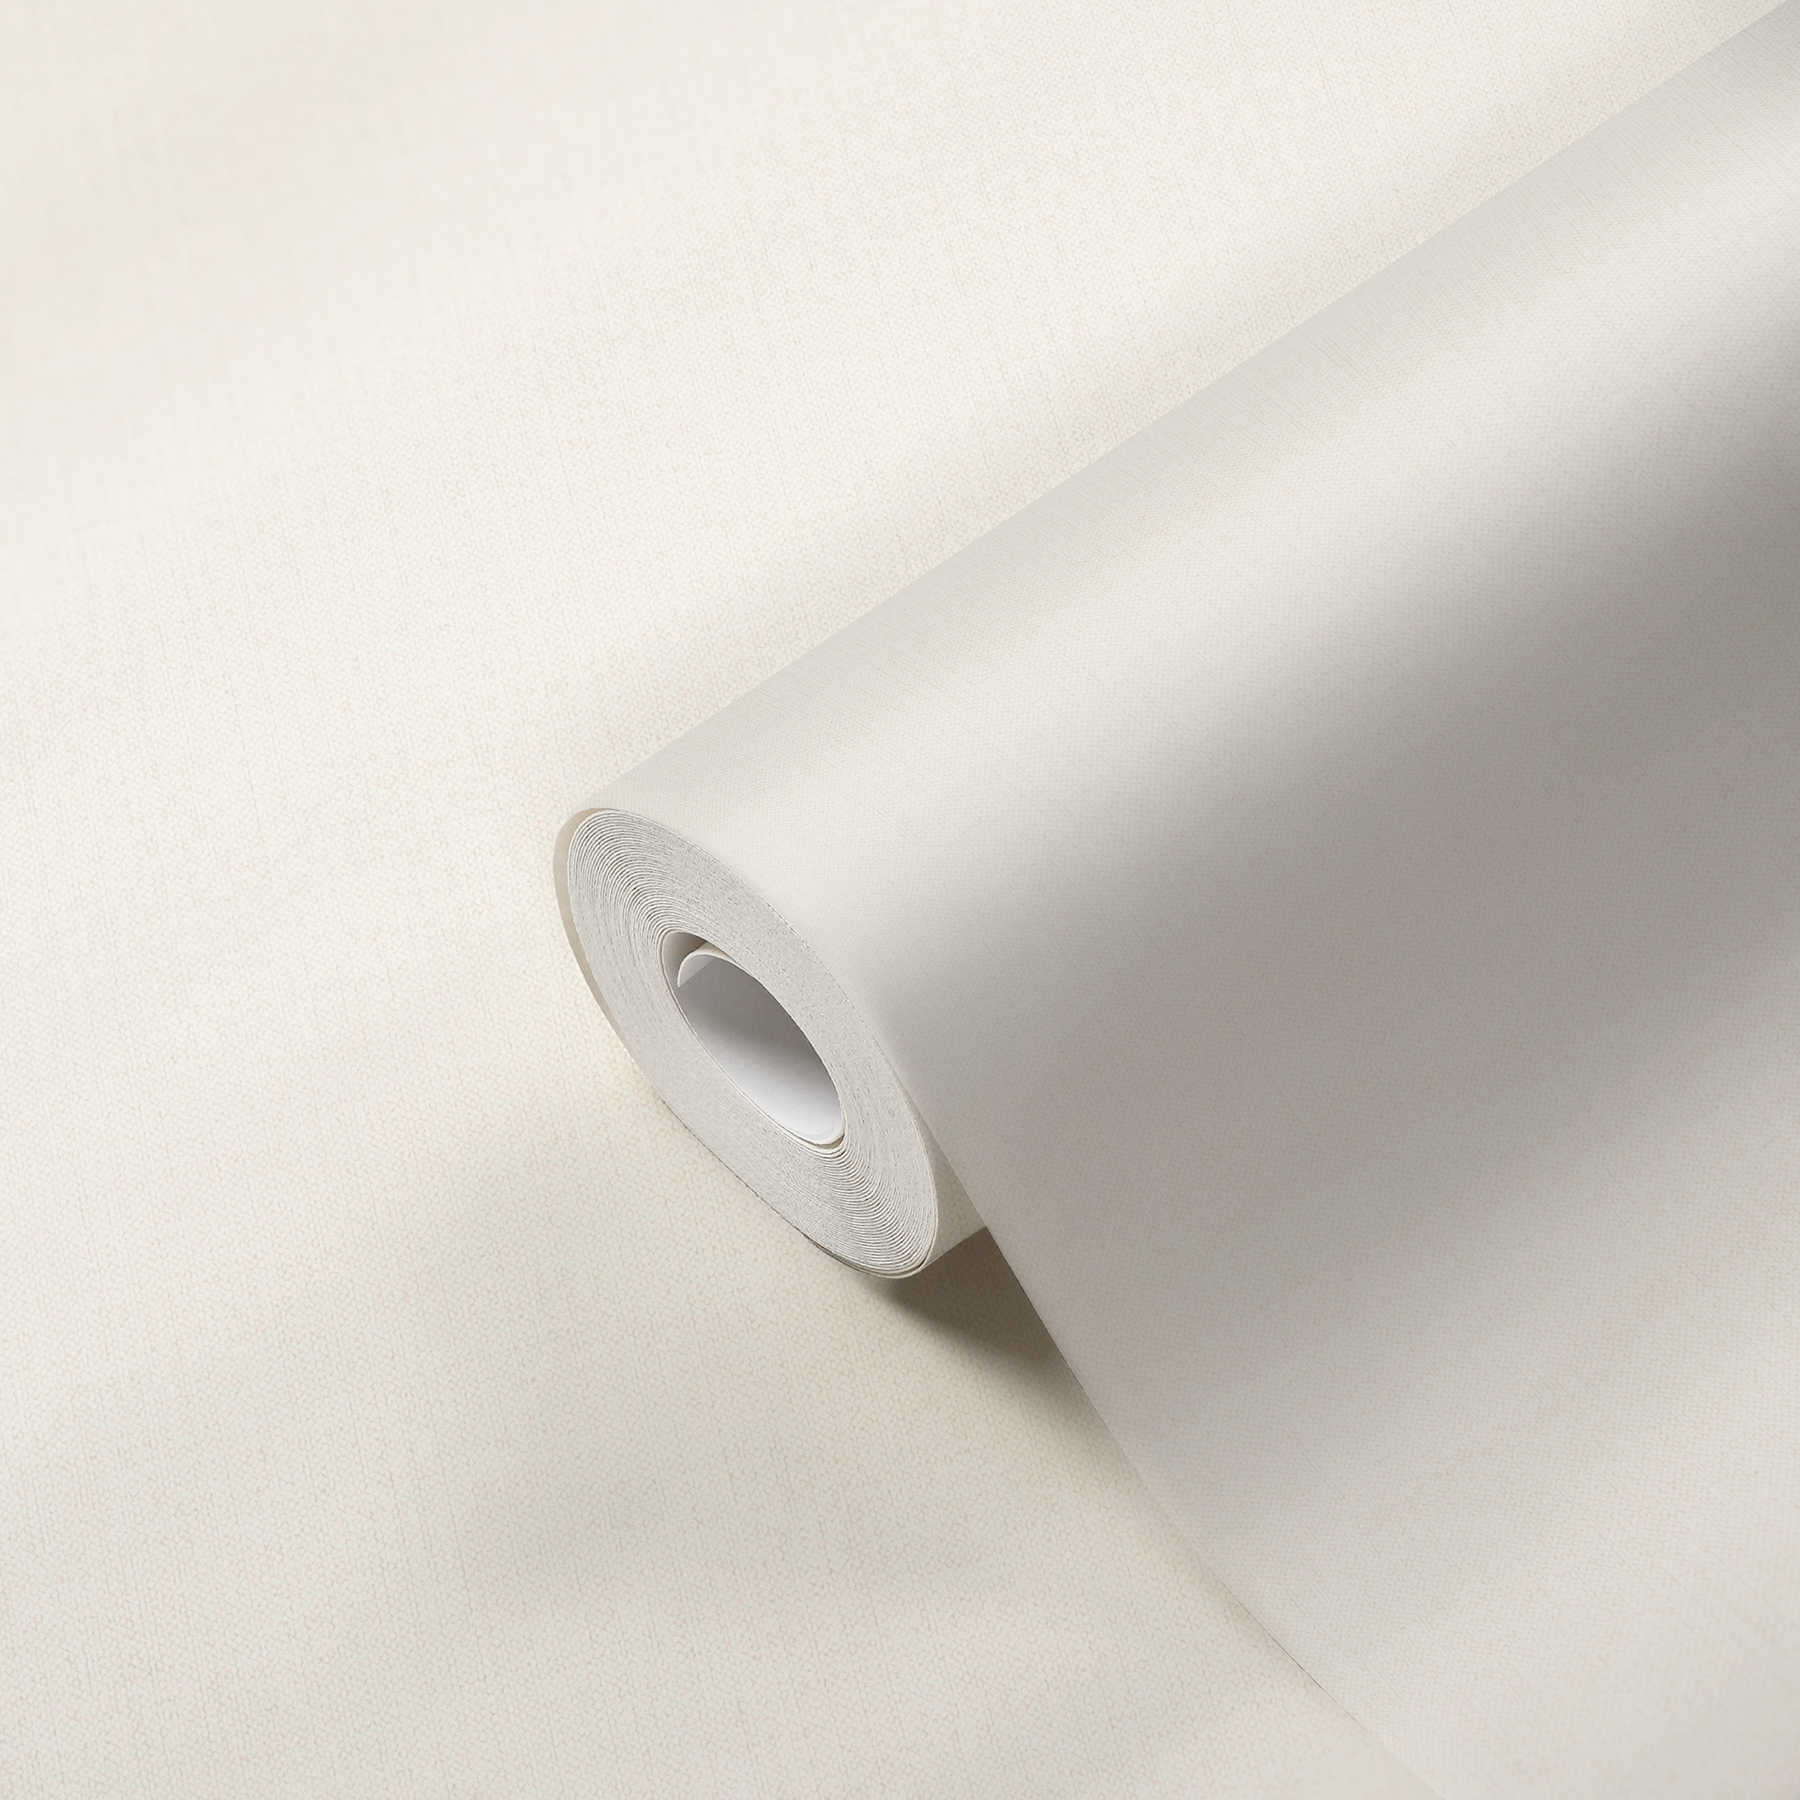             Textile optics non-woven wallpaper white matt with fabric texture
        